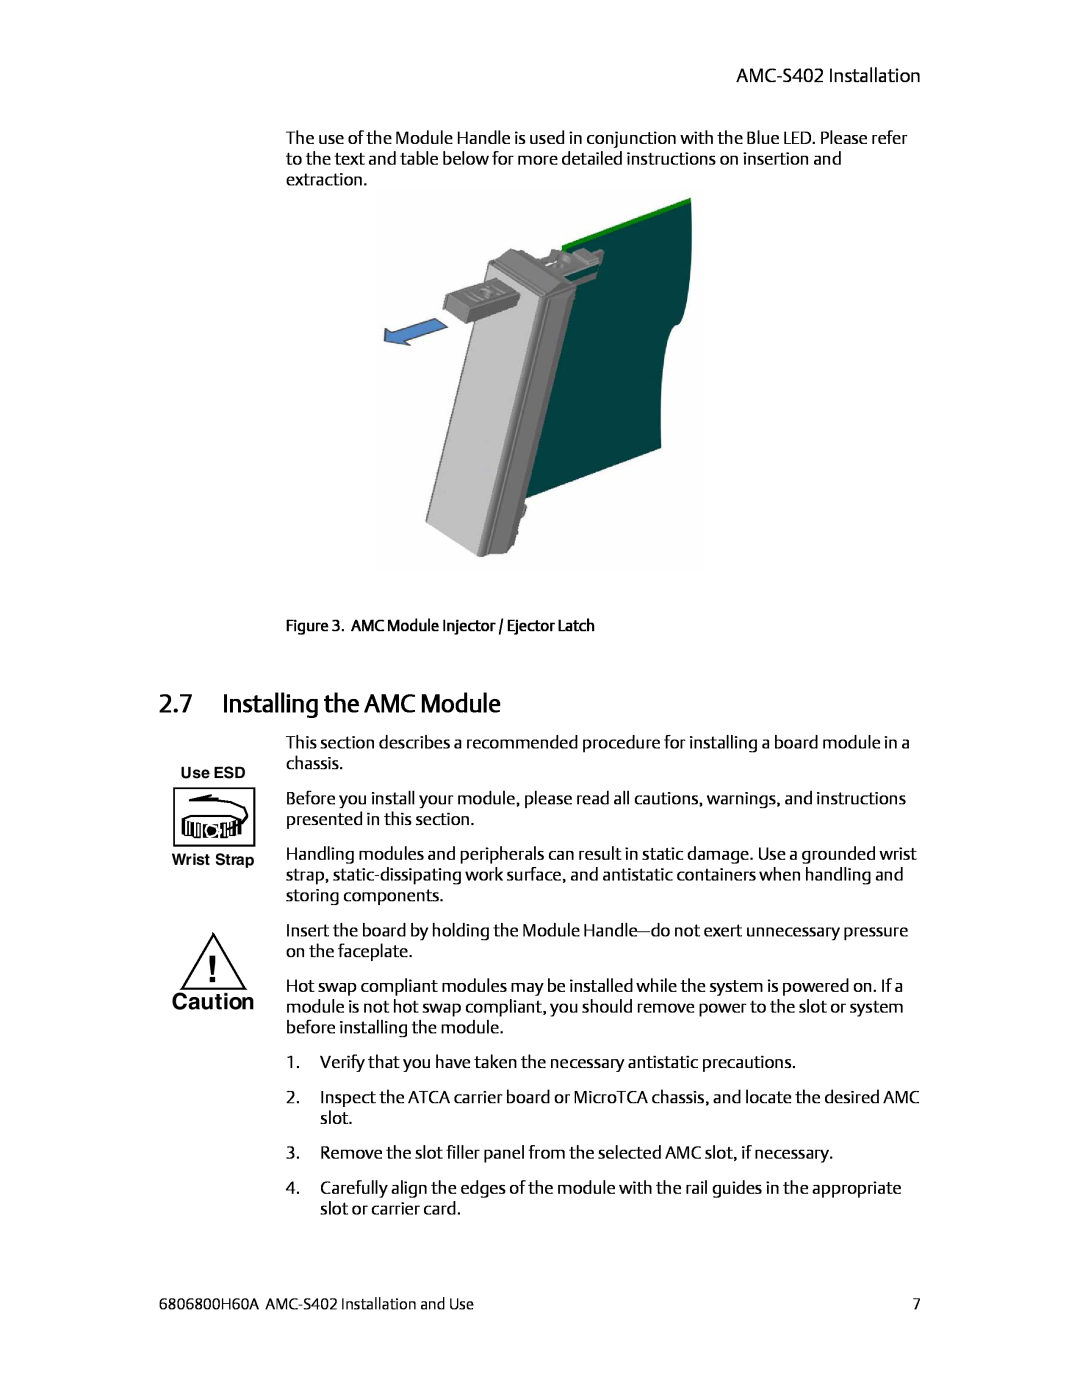 Emerson manual Installing the AMC Module, AMC-S402 Installation 